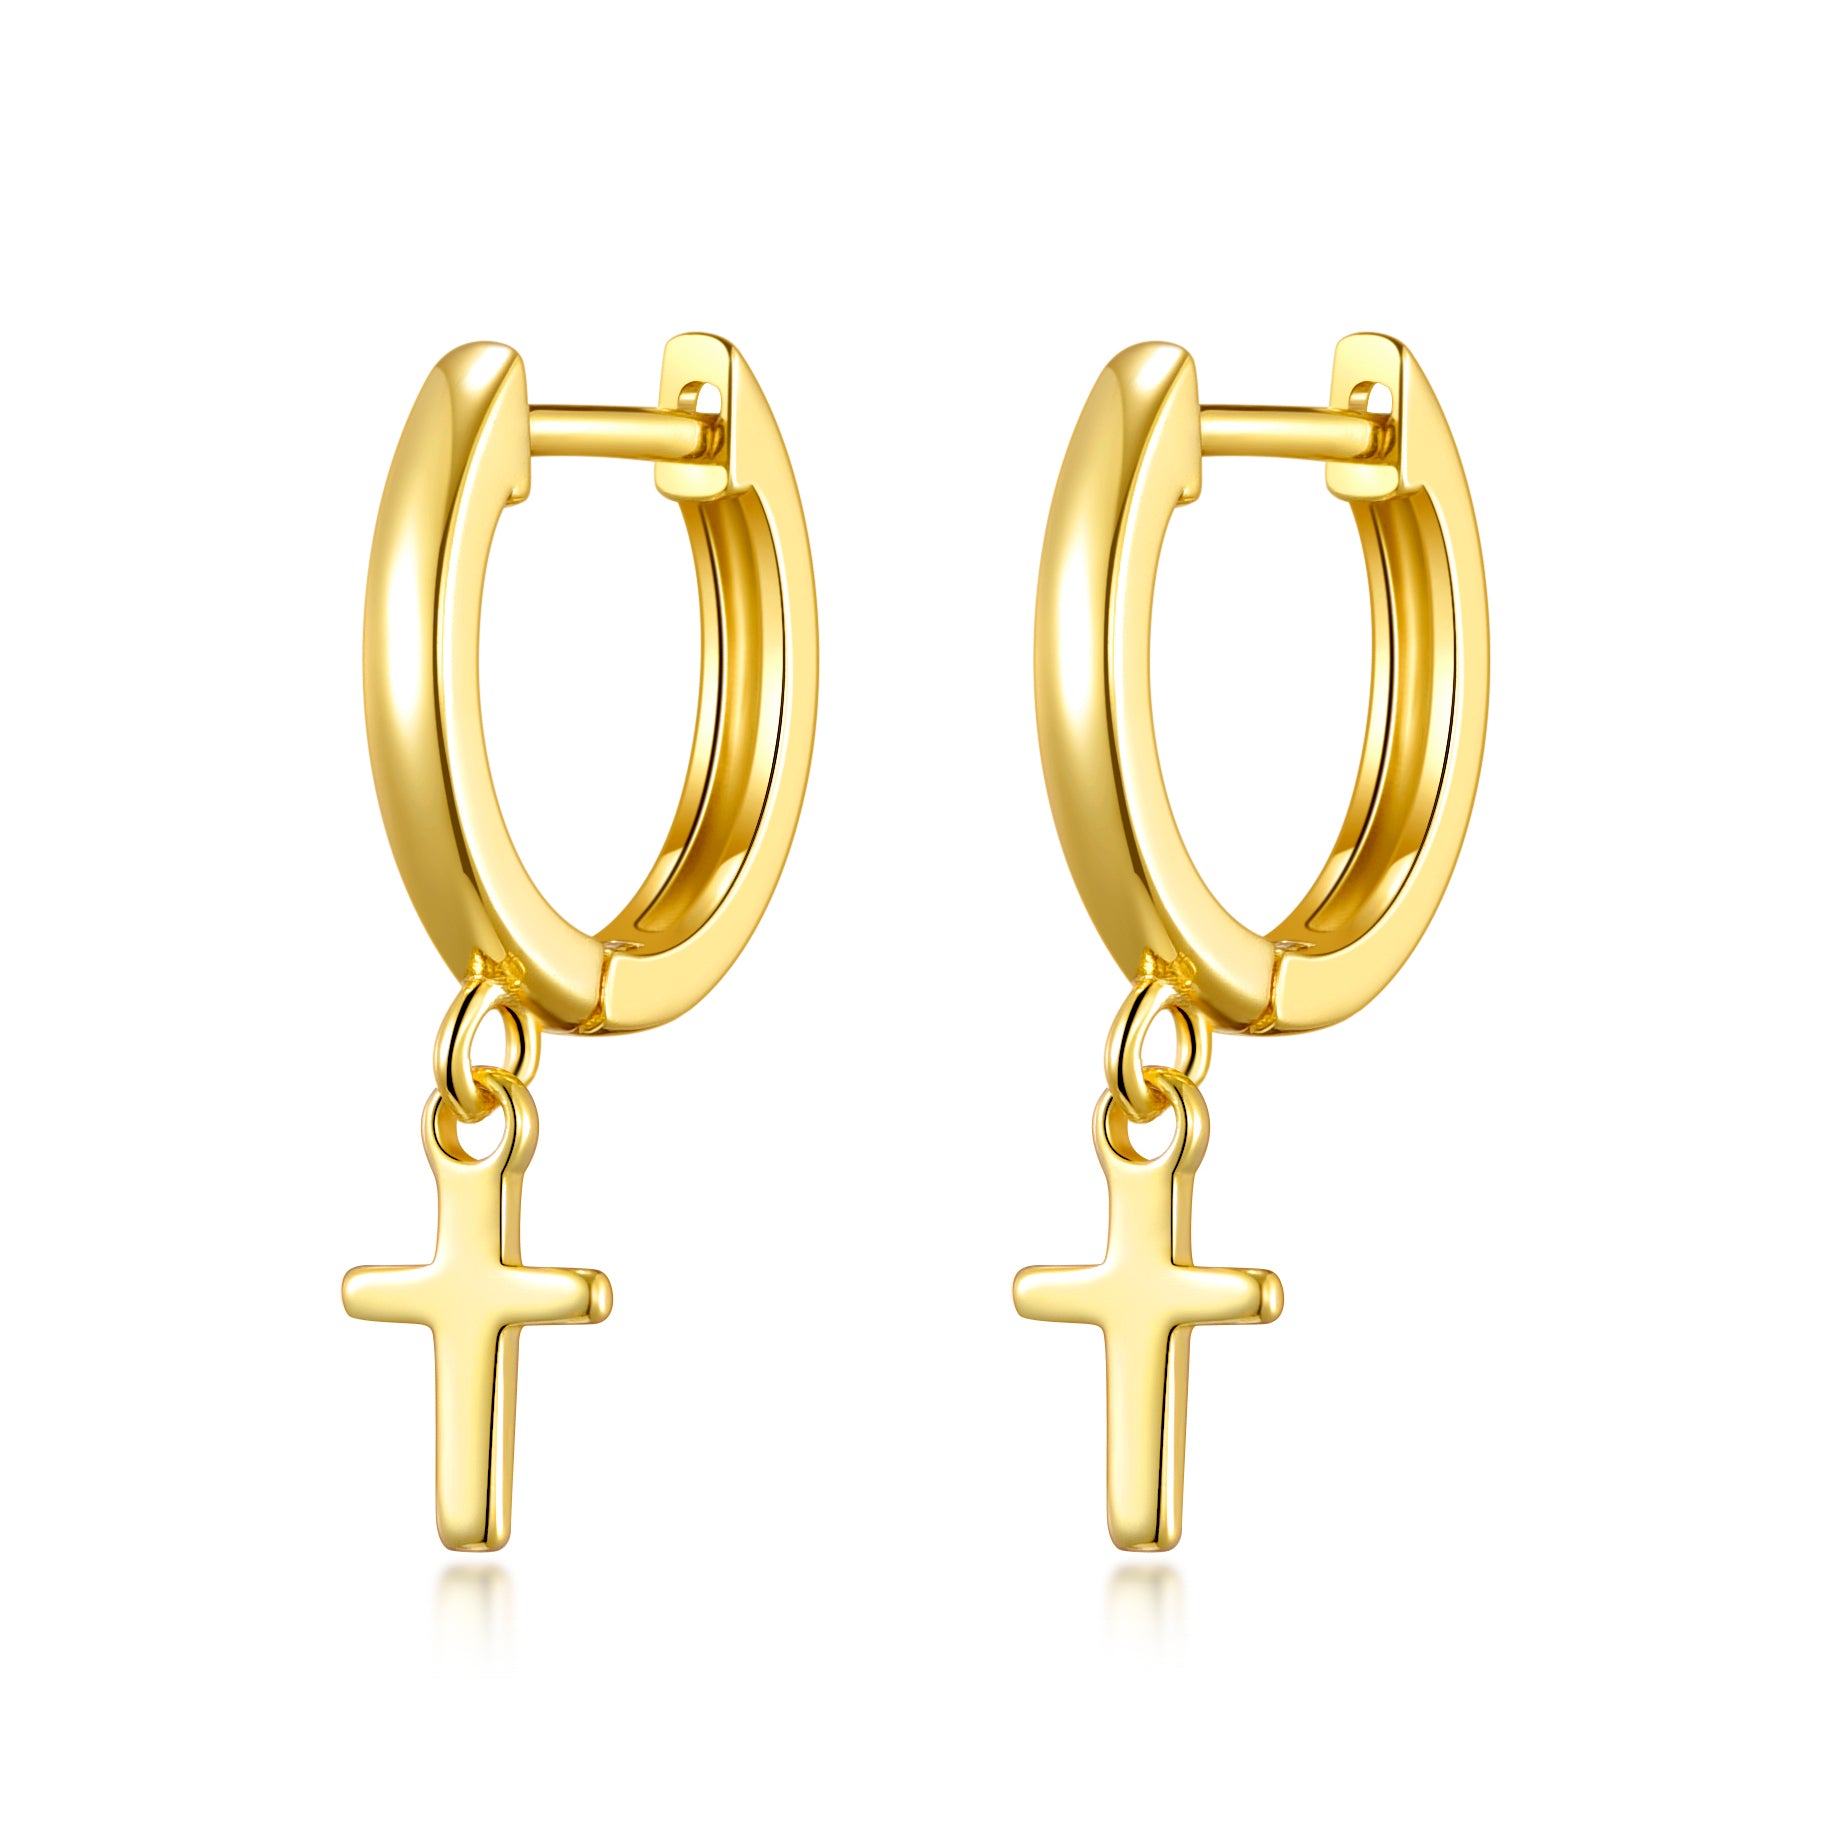 Gold Plated Cross Charm Hoop Earrings by Philip Jones Jewellery